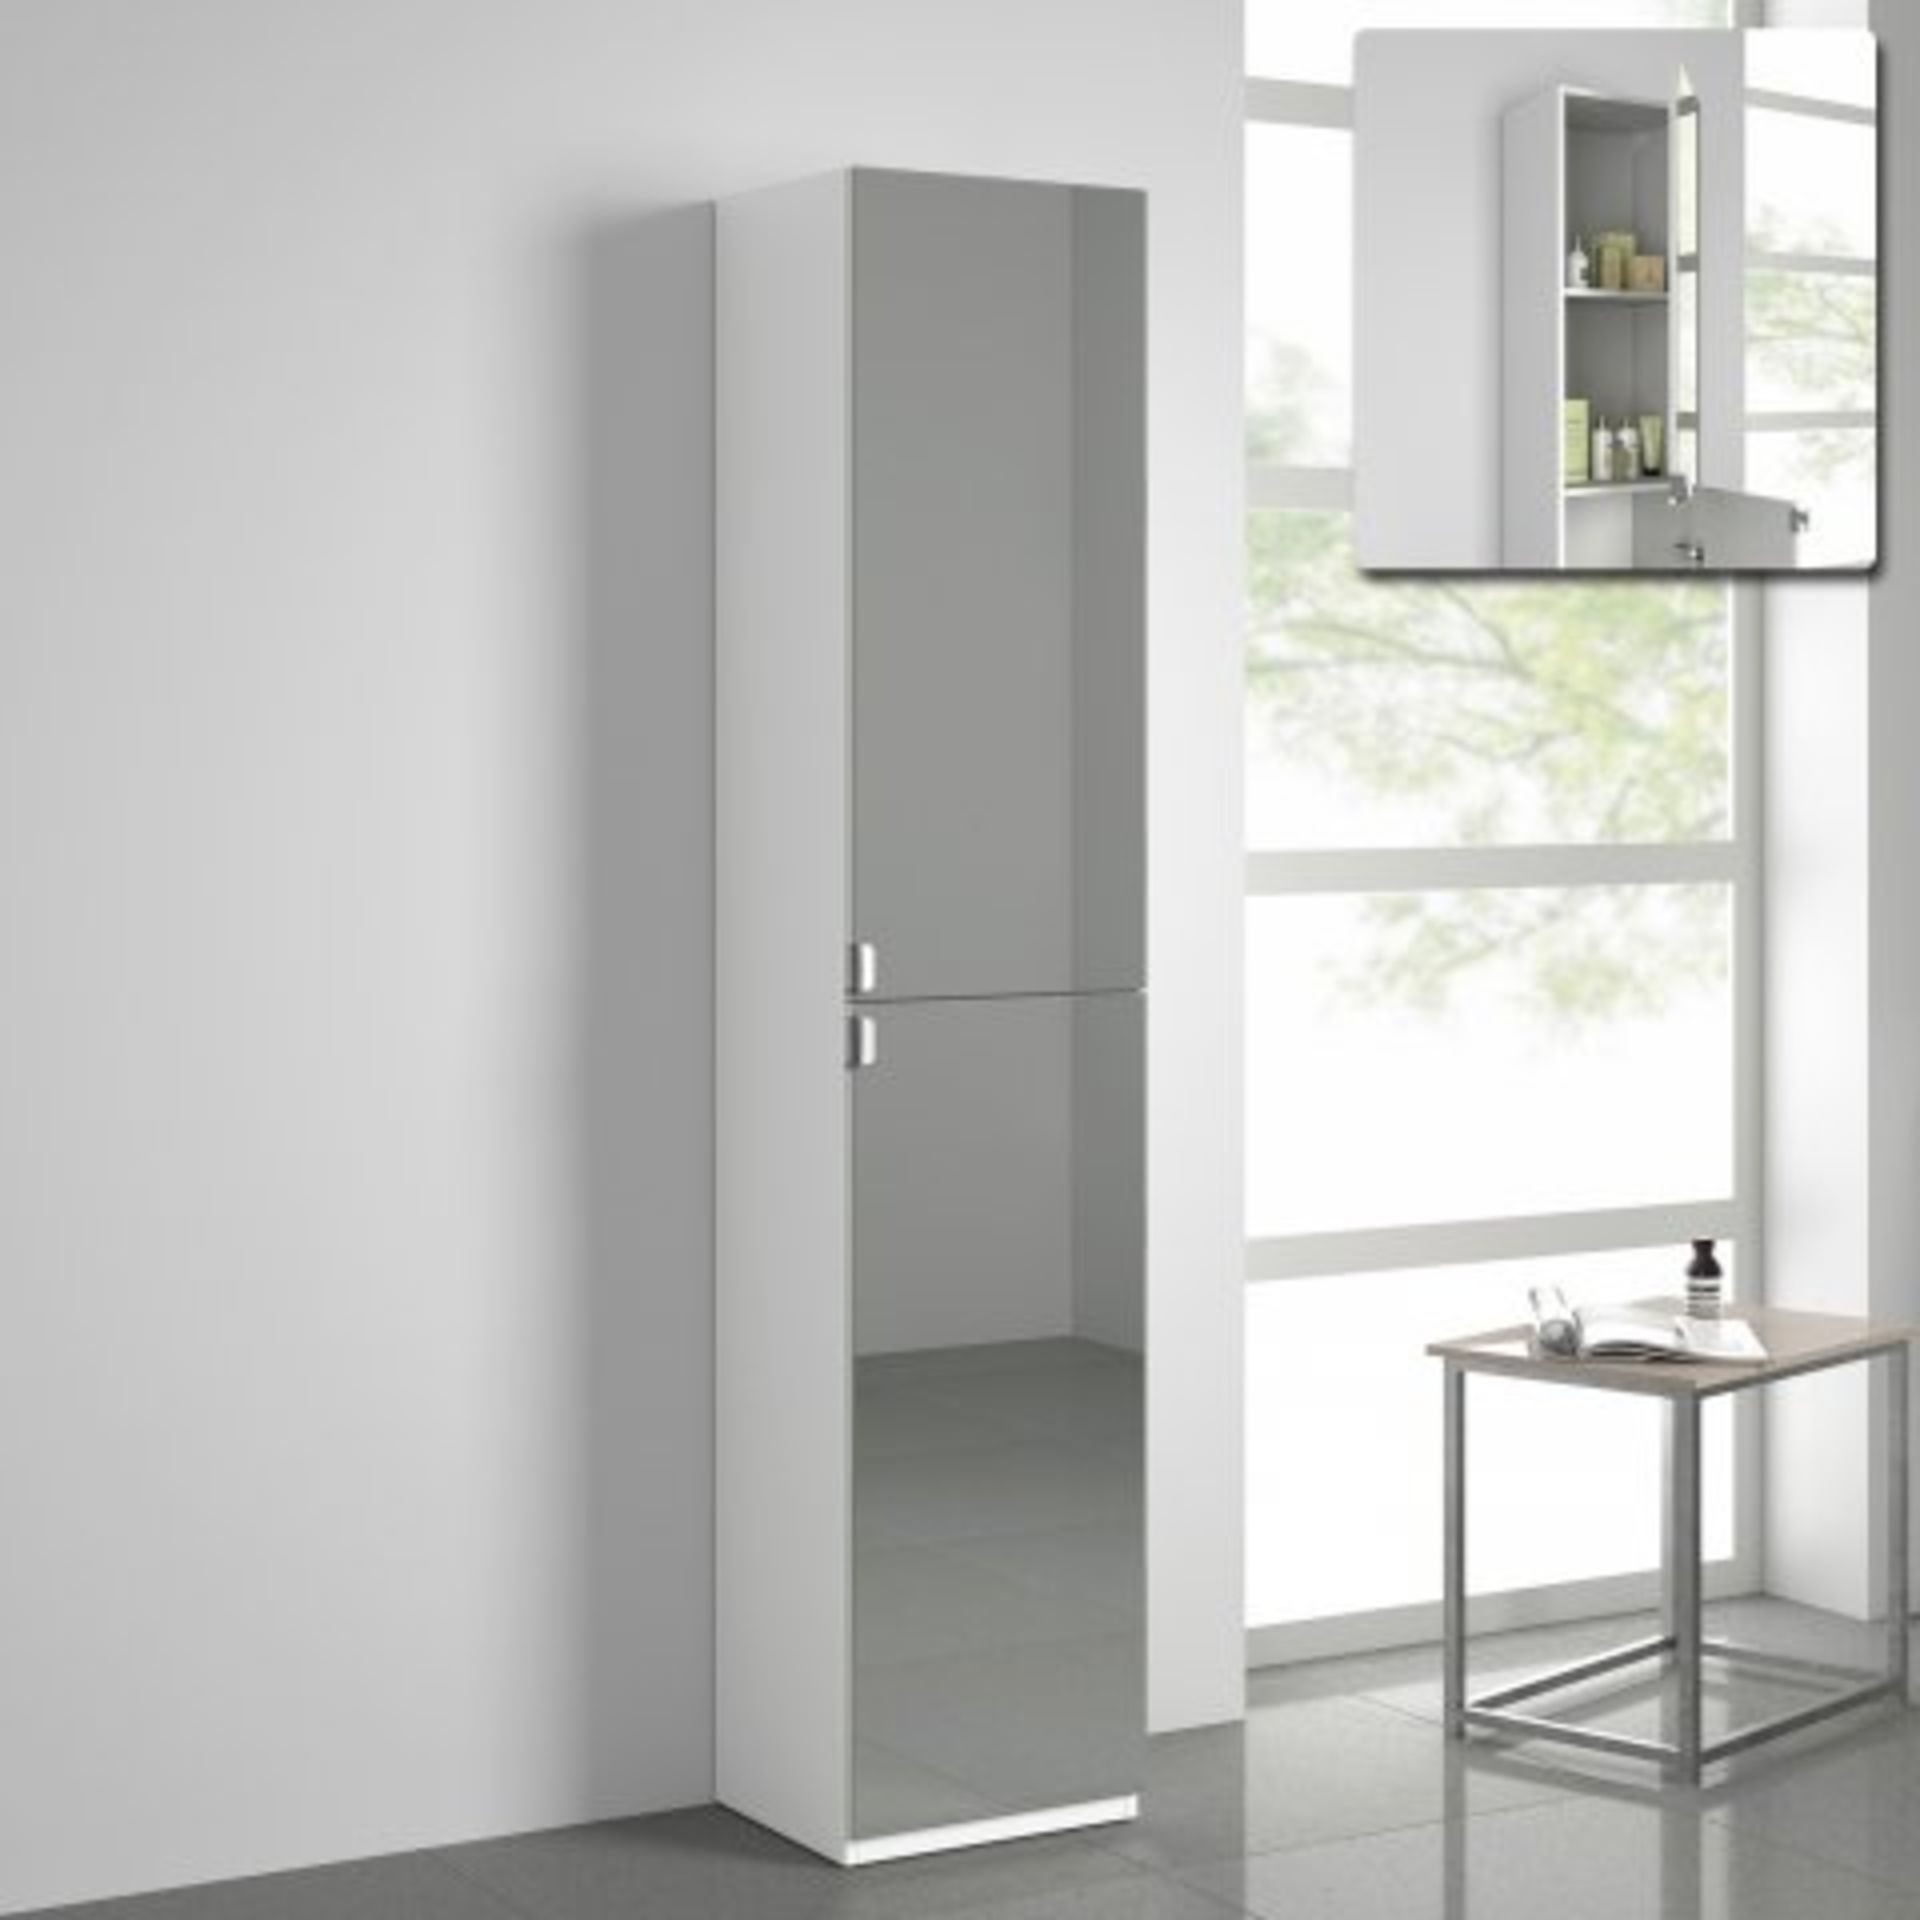 (J51) 1700x350mm Mirrored Door Matte White Tall Storage Cabinet - Floor Standing. RRP £339.99.